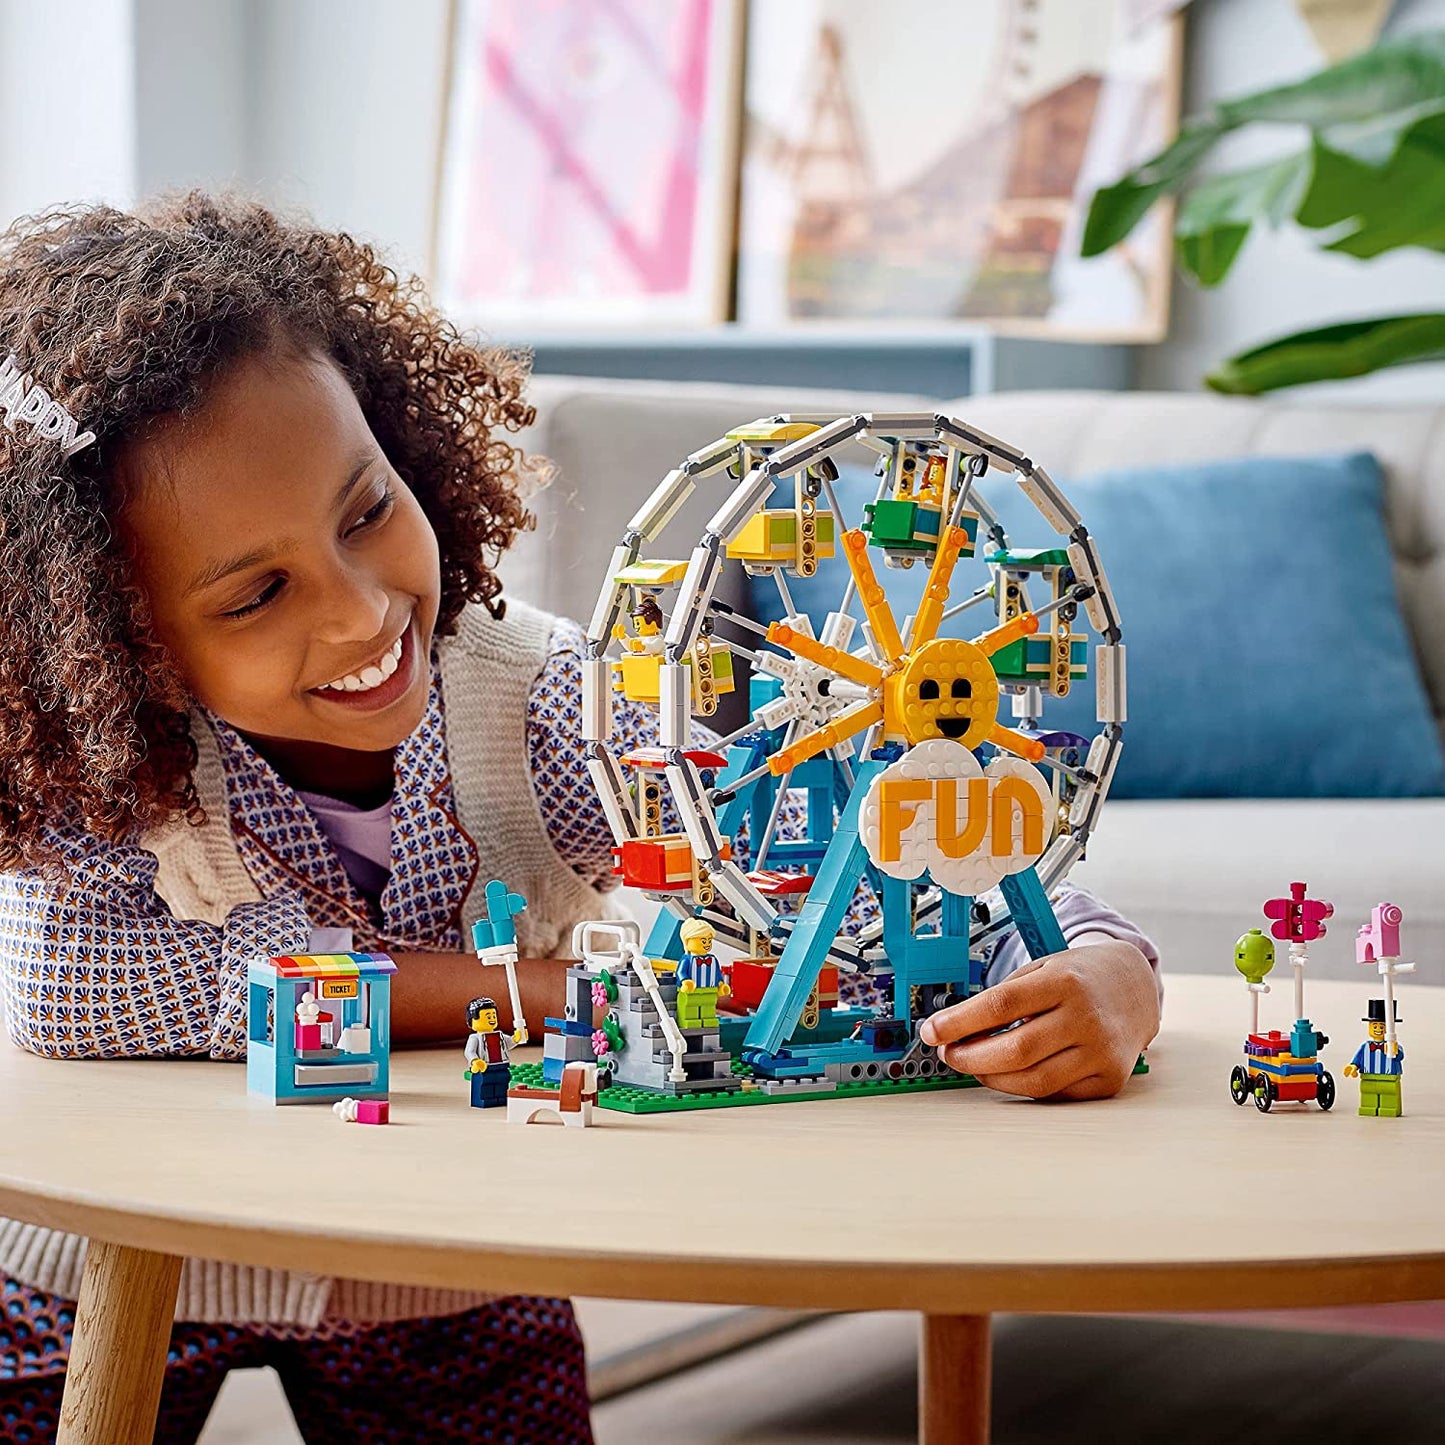 LEGO Creator - 3in1 Ferris Wheel 31119